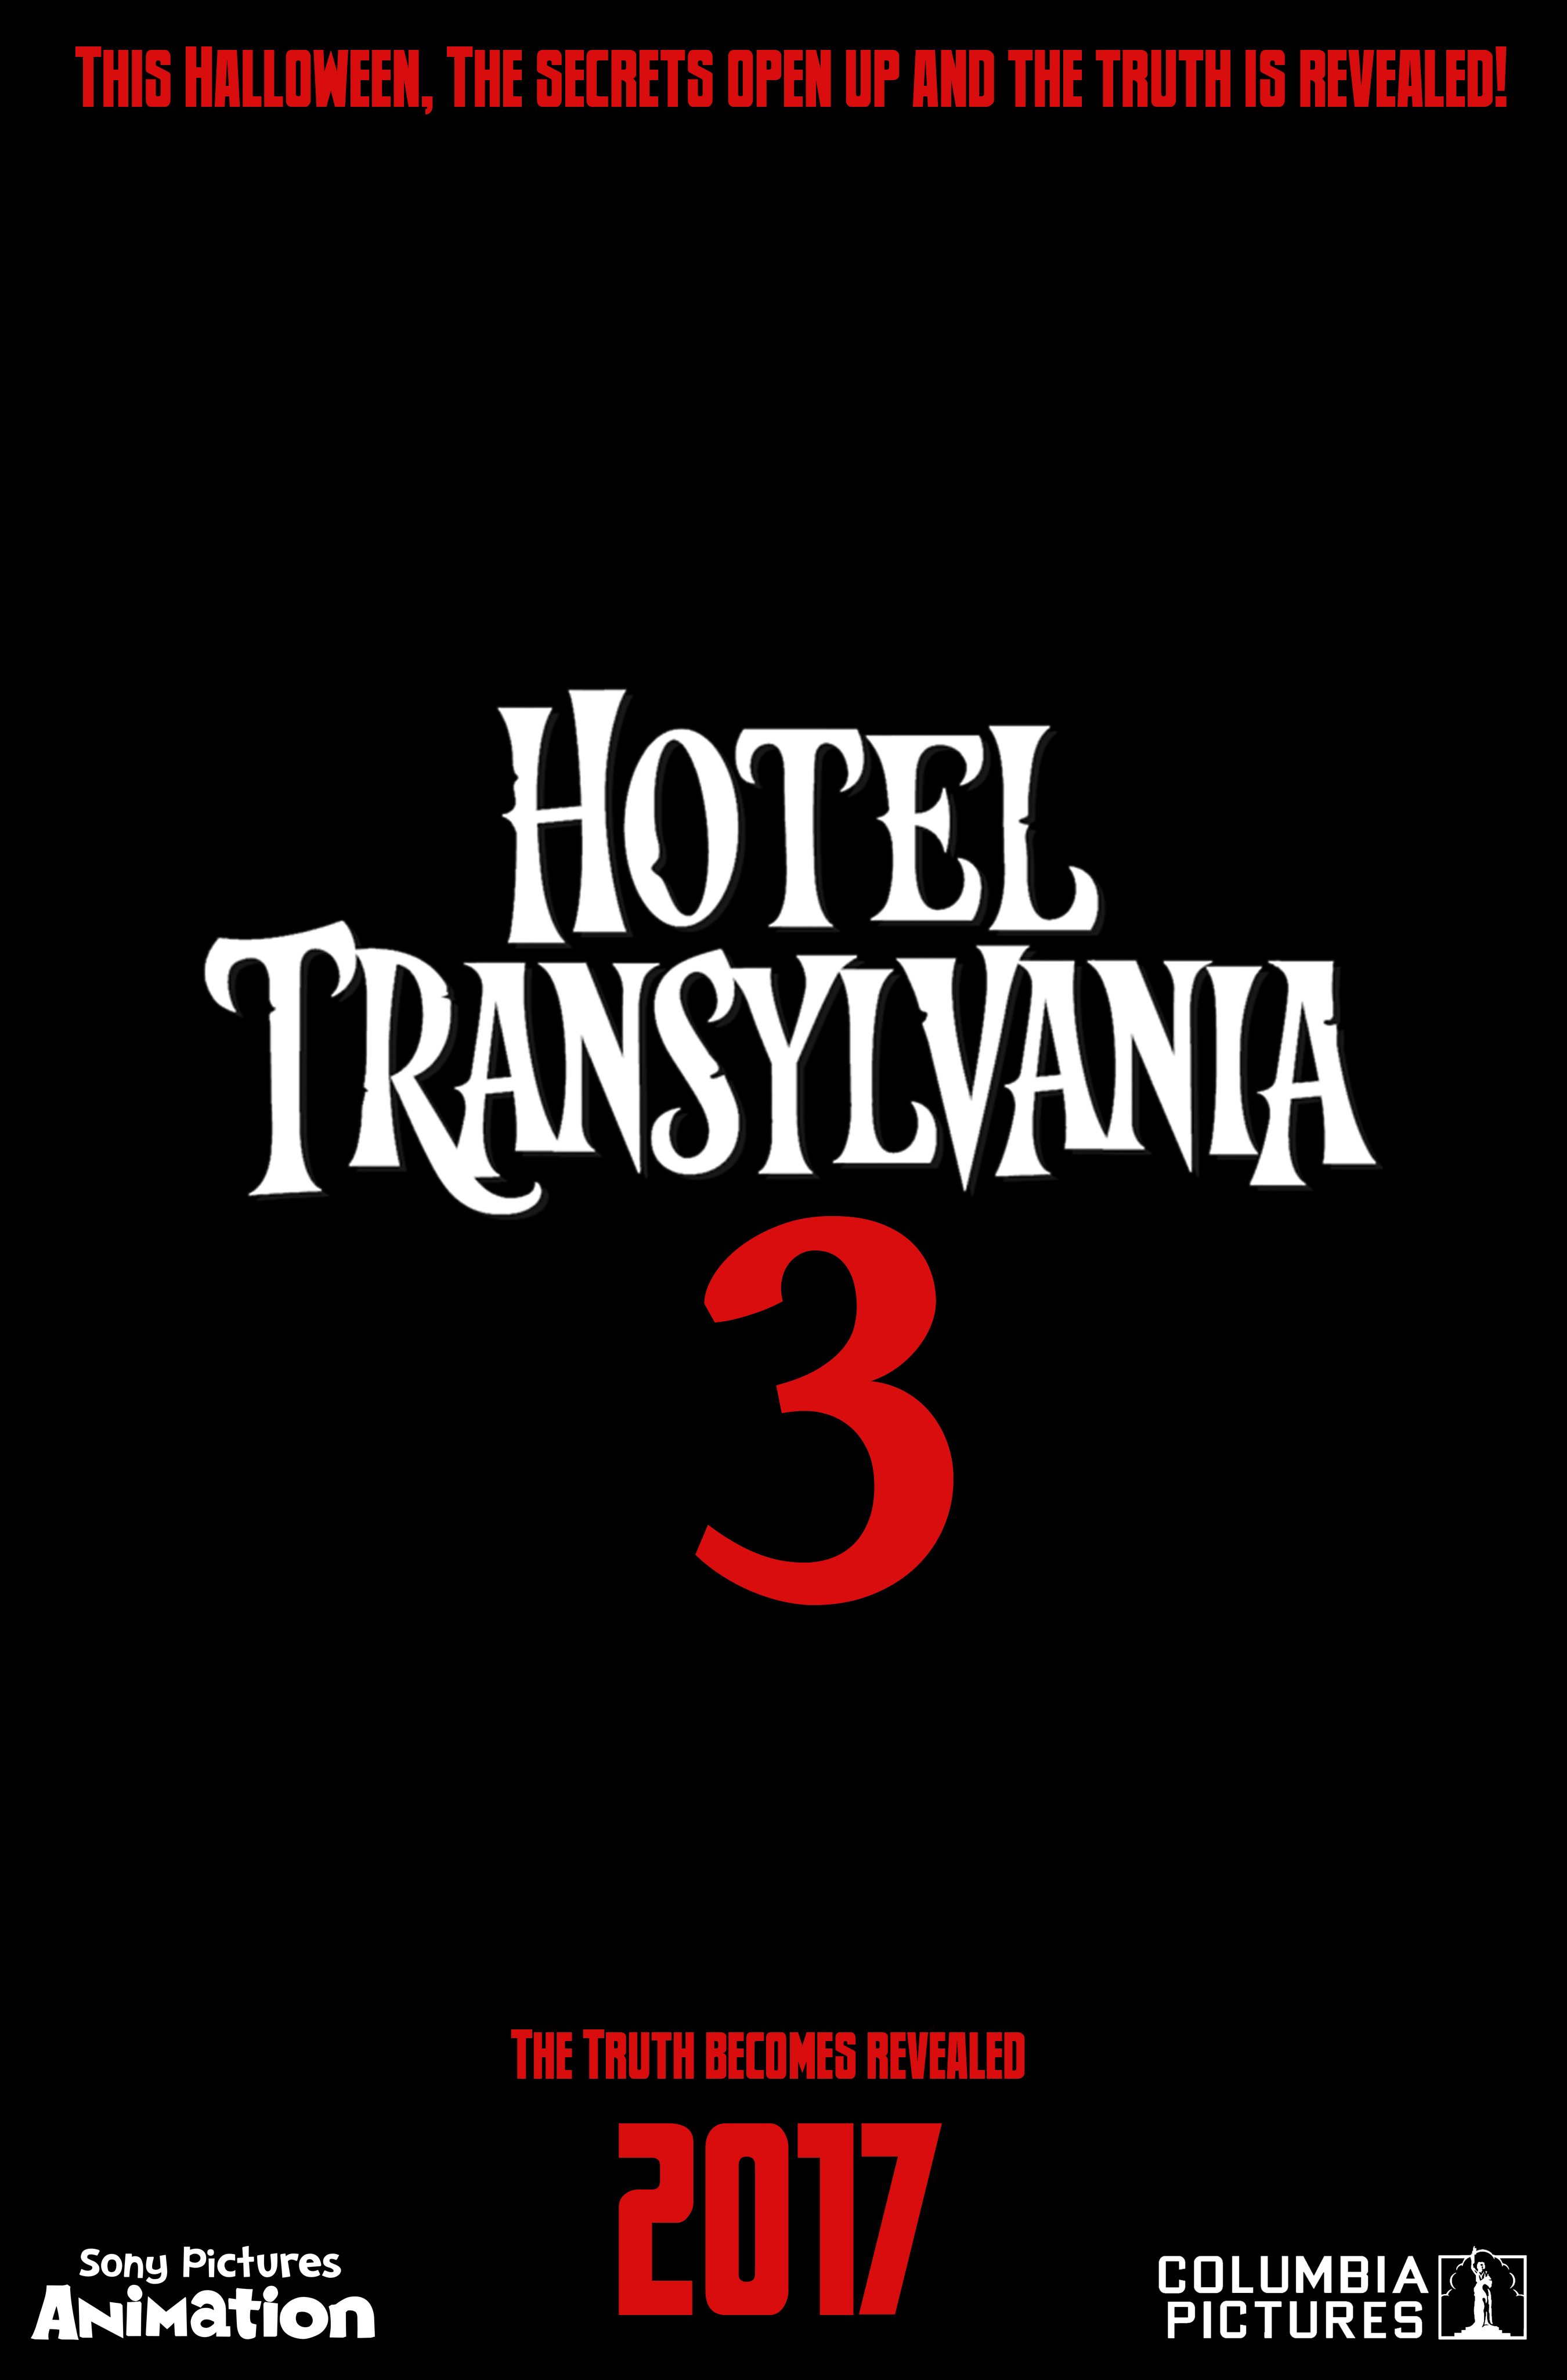 Hotel Transylvania 3 teljes film online magyar szinkronnal